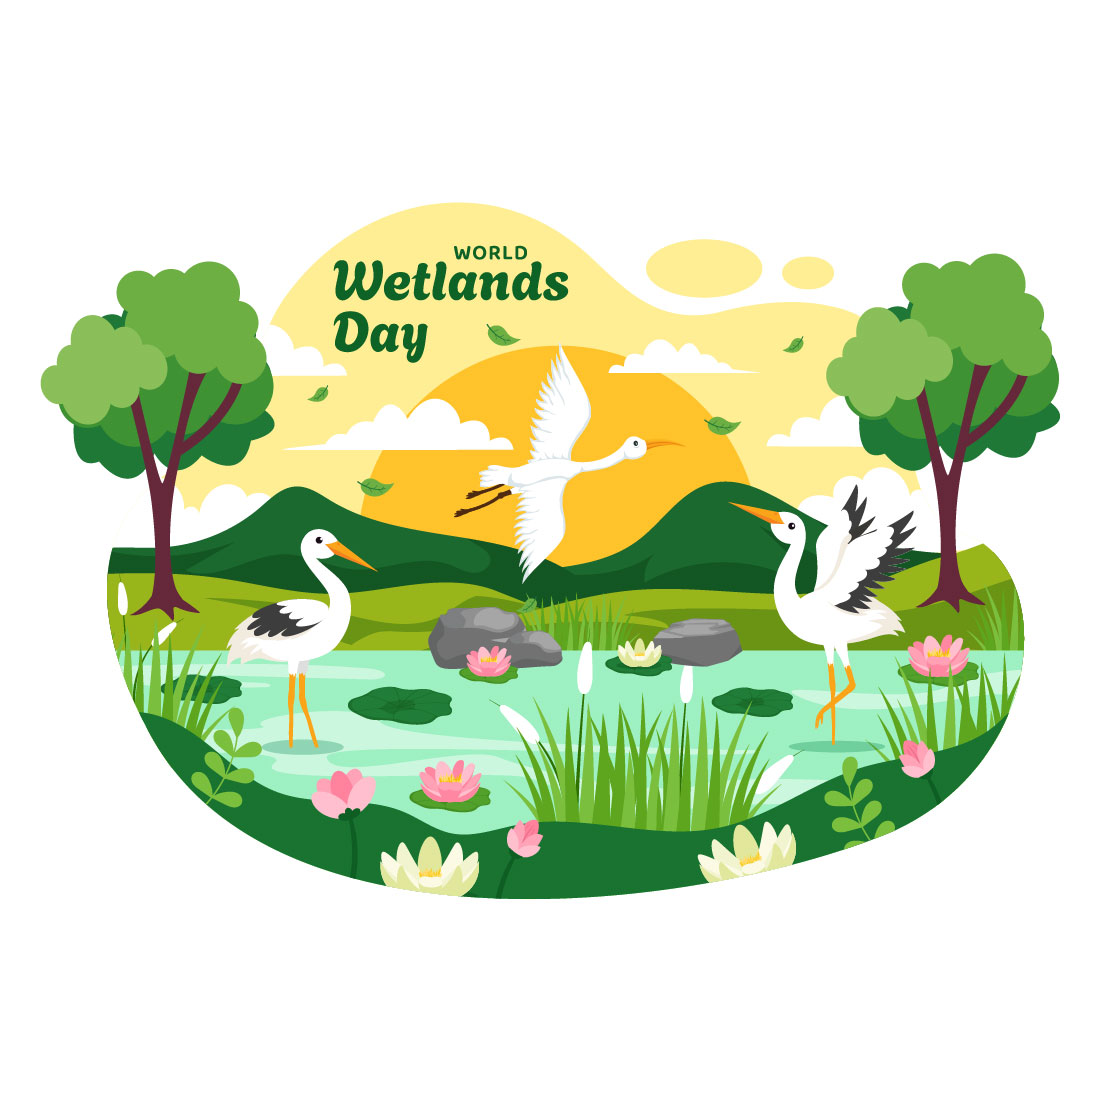 12 World Wetlands Day Illustration cover image.